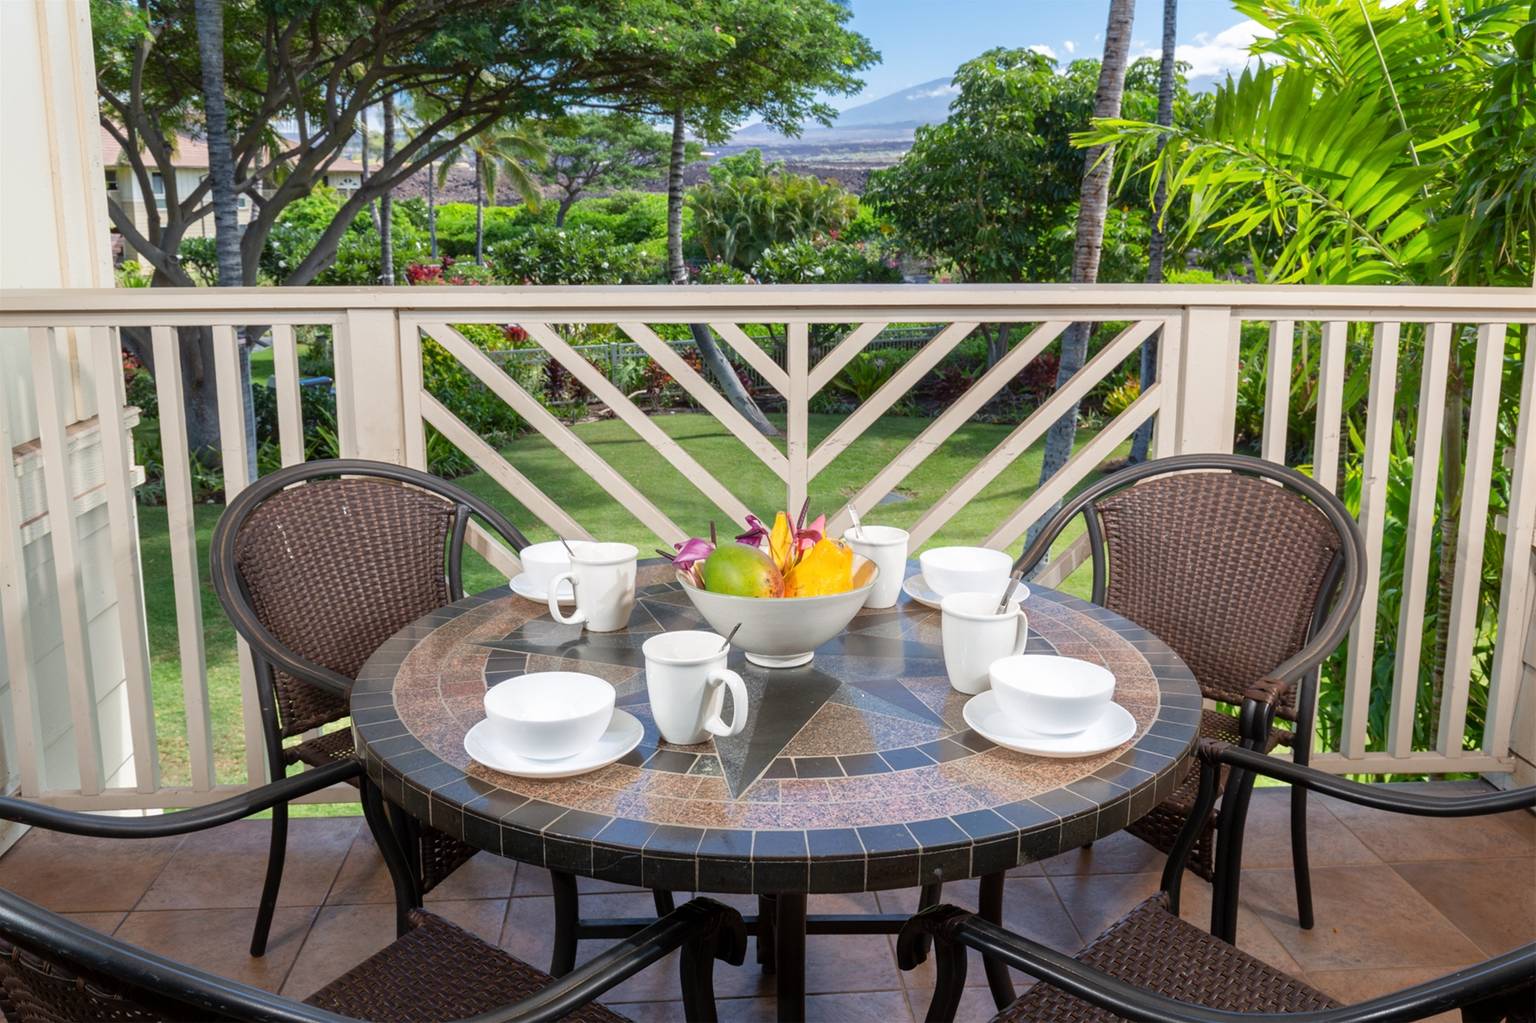 Waikoloa Beach Resort Vacation Rental